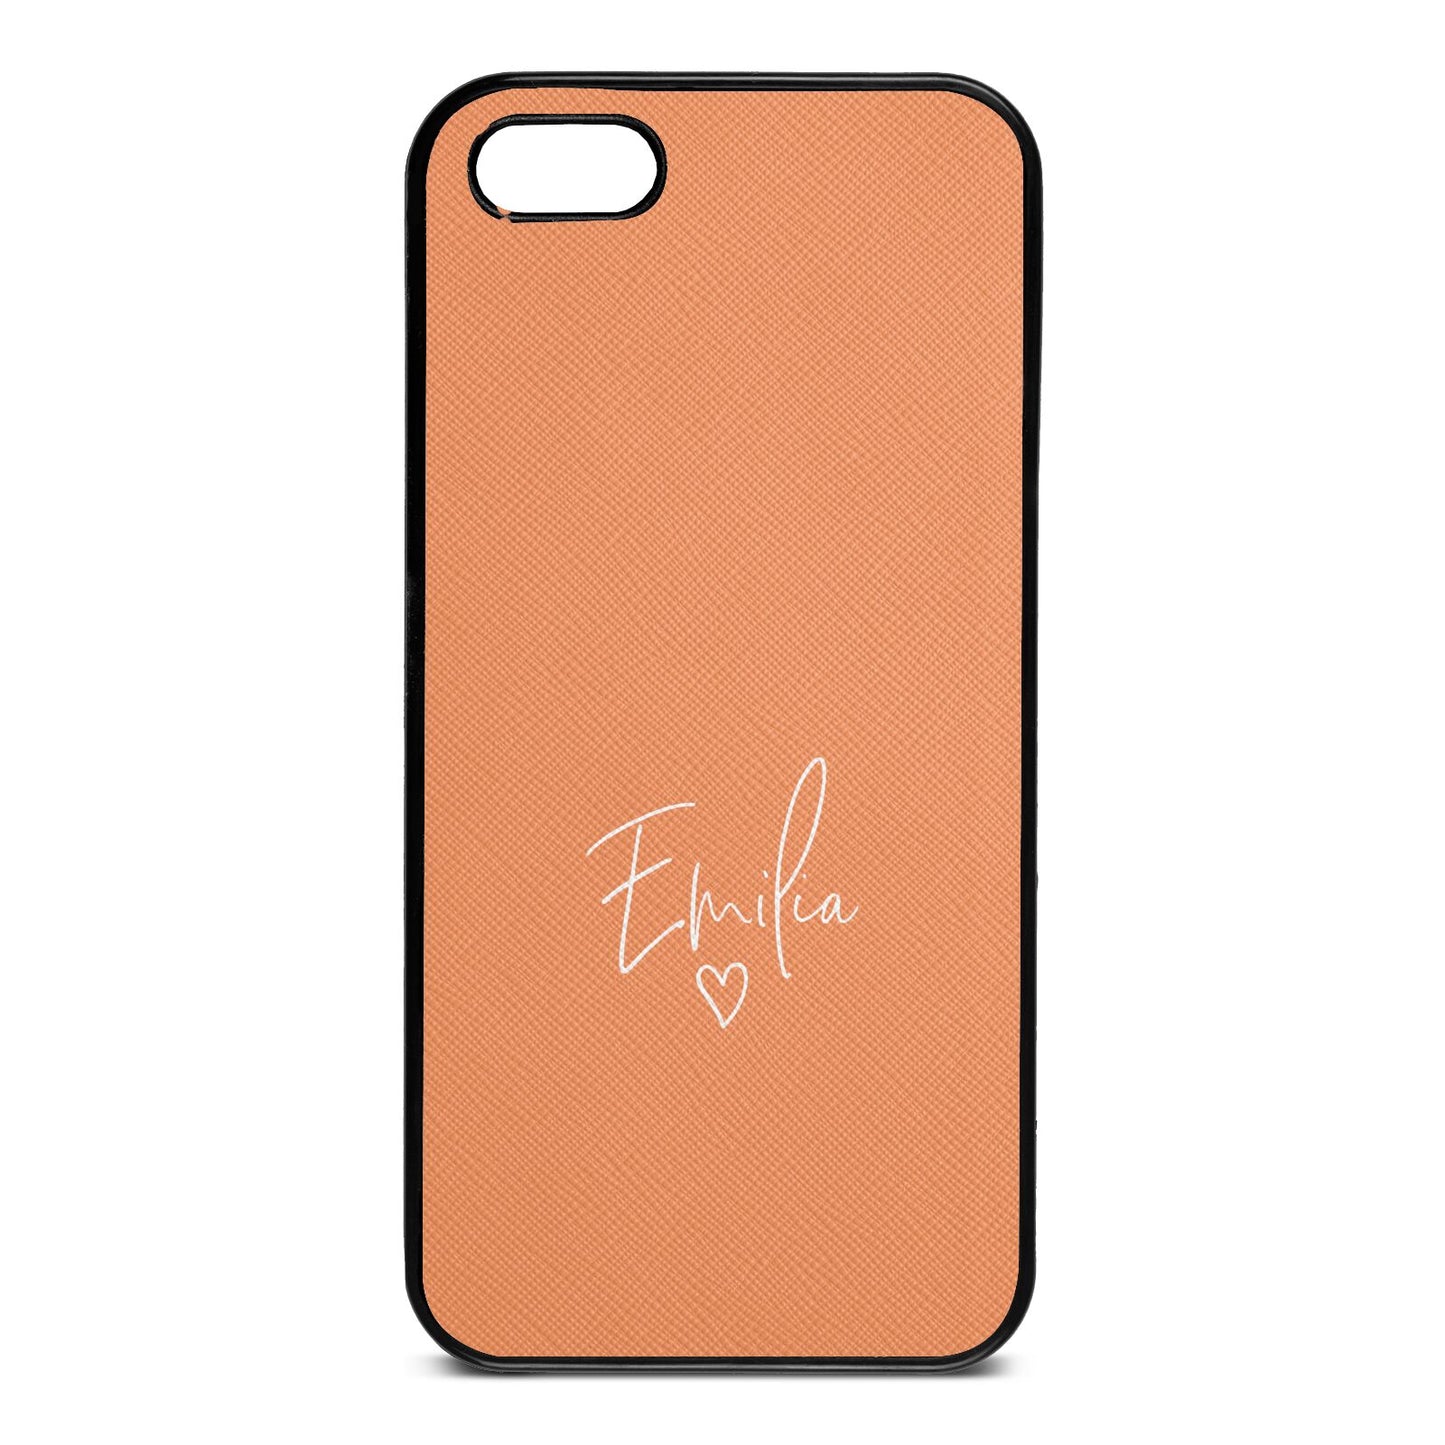 White Handwritten Name Transparent Orange Saffiano Leather iPhone 5 Case